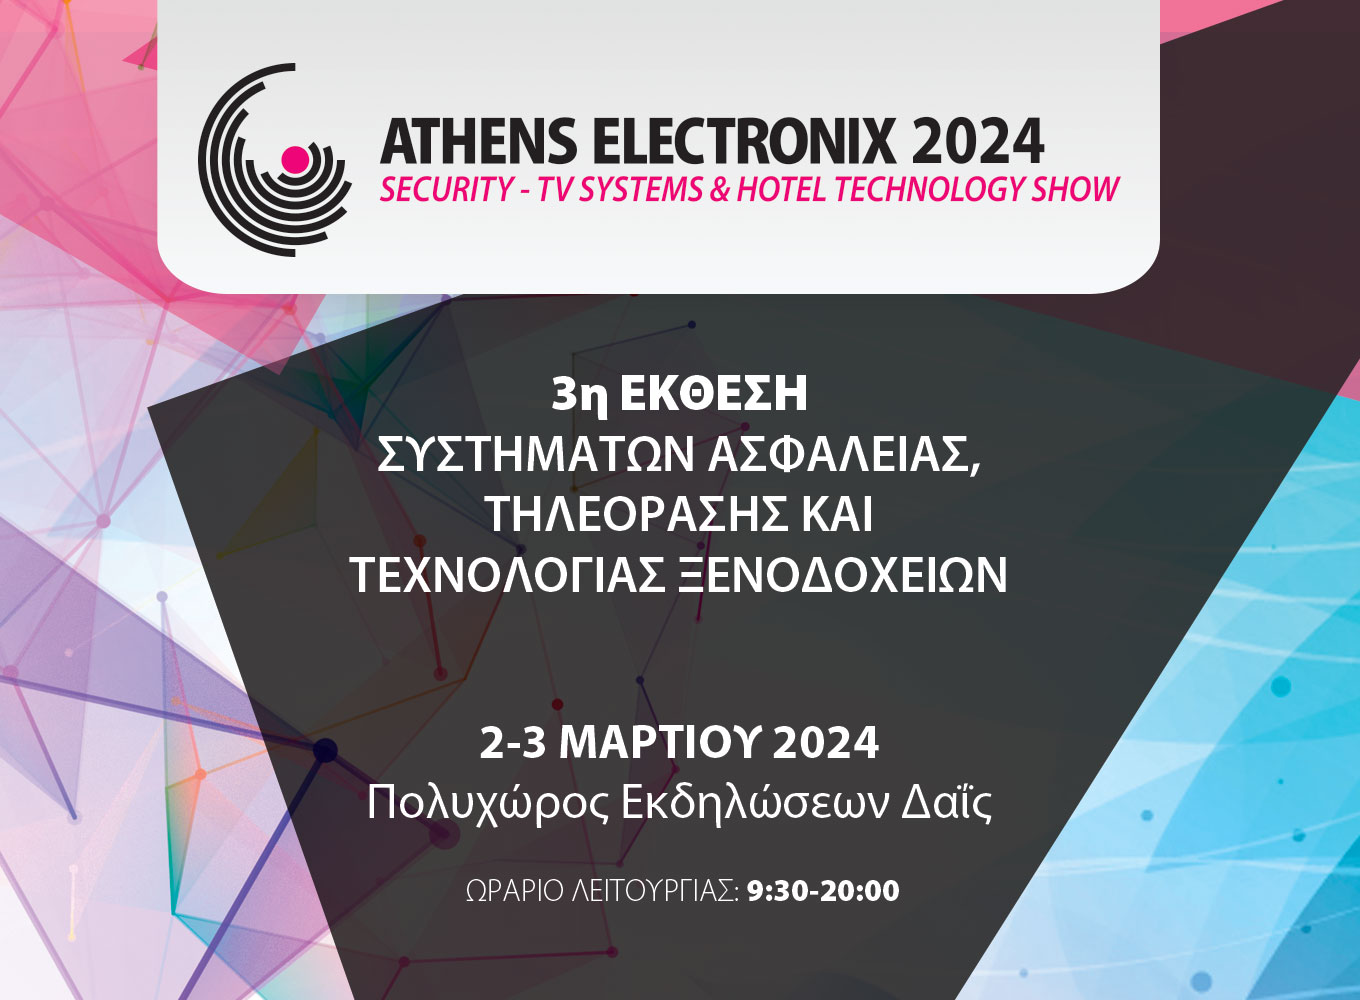 ATHENS ELECTRONIX HEADER NEWSLETTER 2024 1360x1000